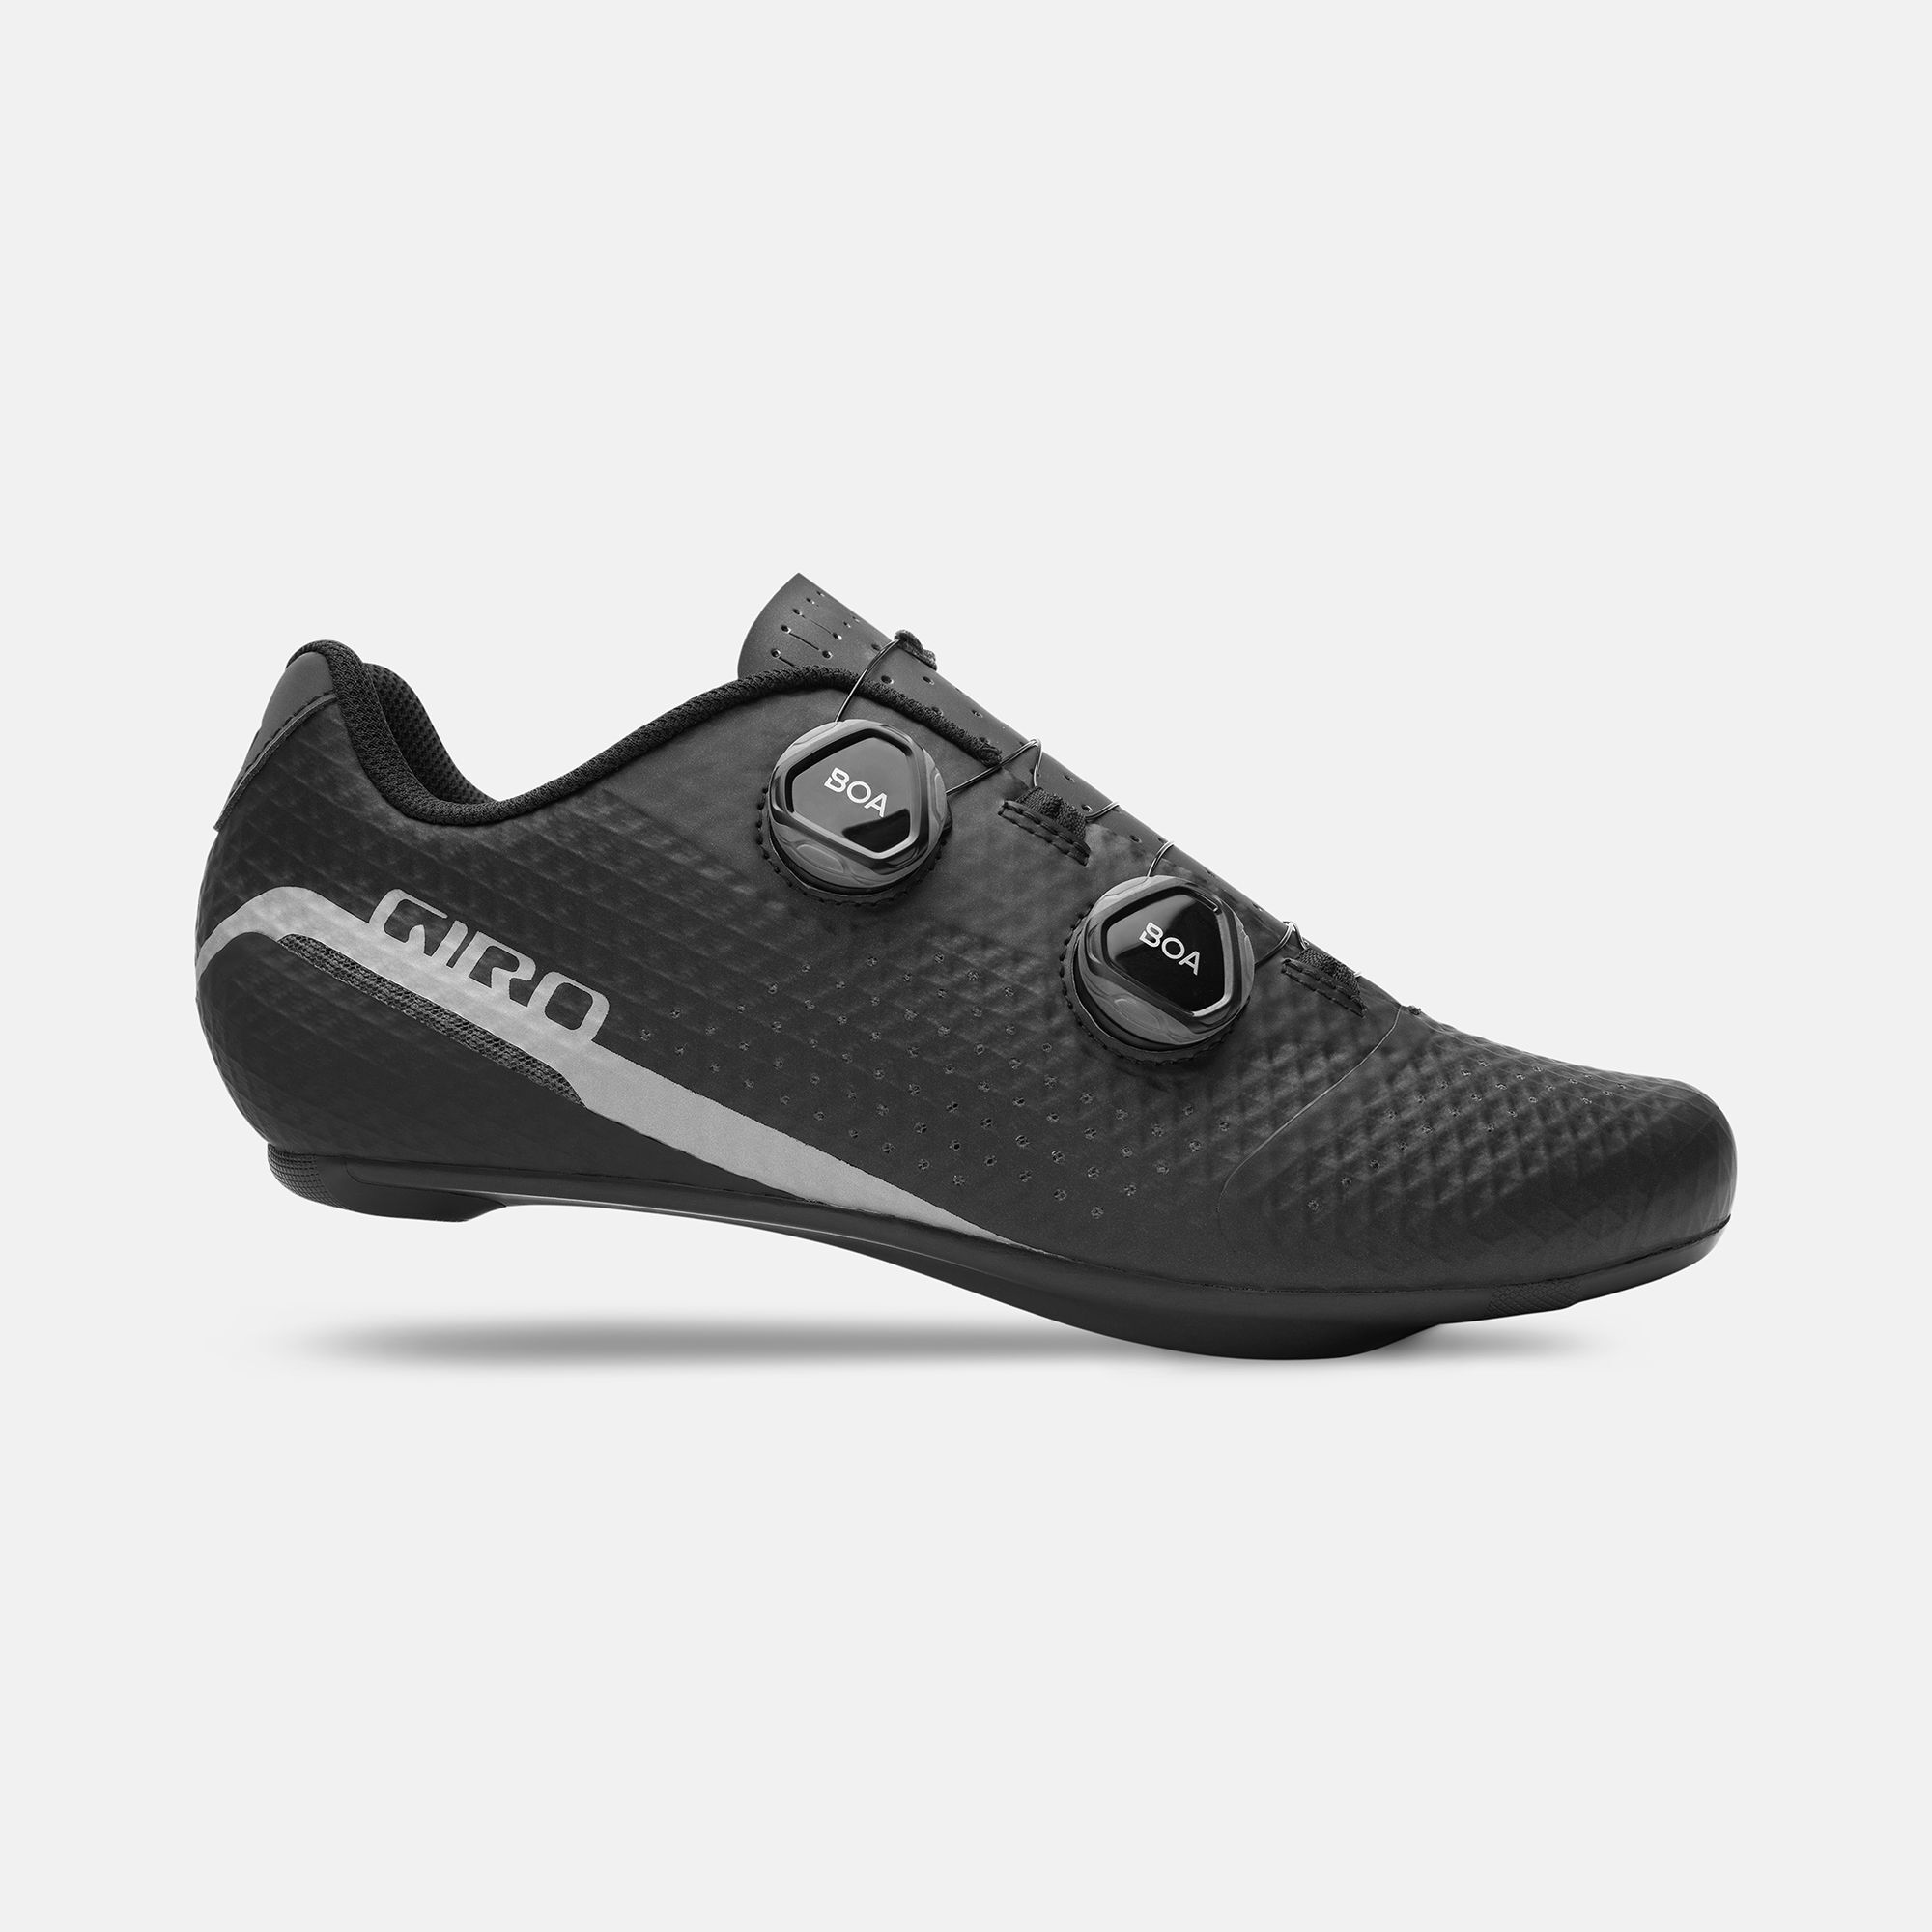 Giro Grynd Men's Dual Sport/Street Cycling Shoes 